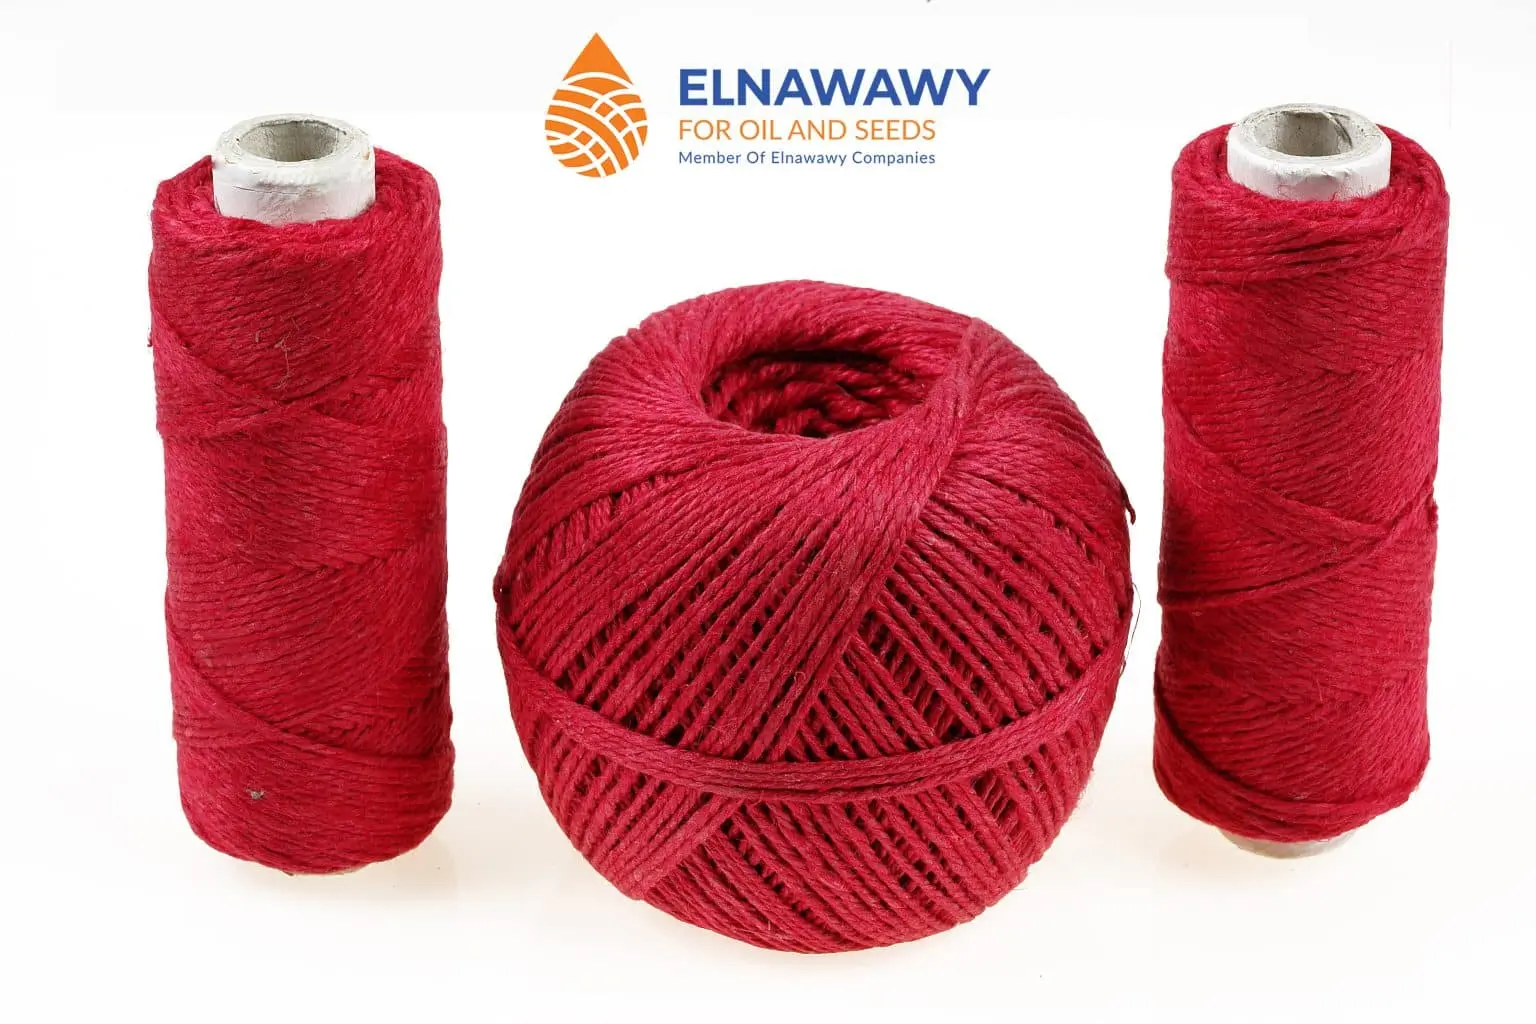 product of red flax yarn ball and hemp yarn spool